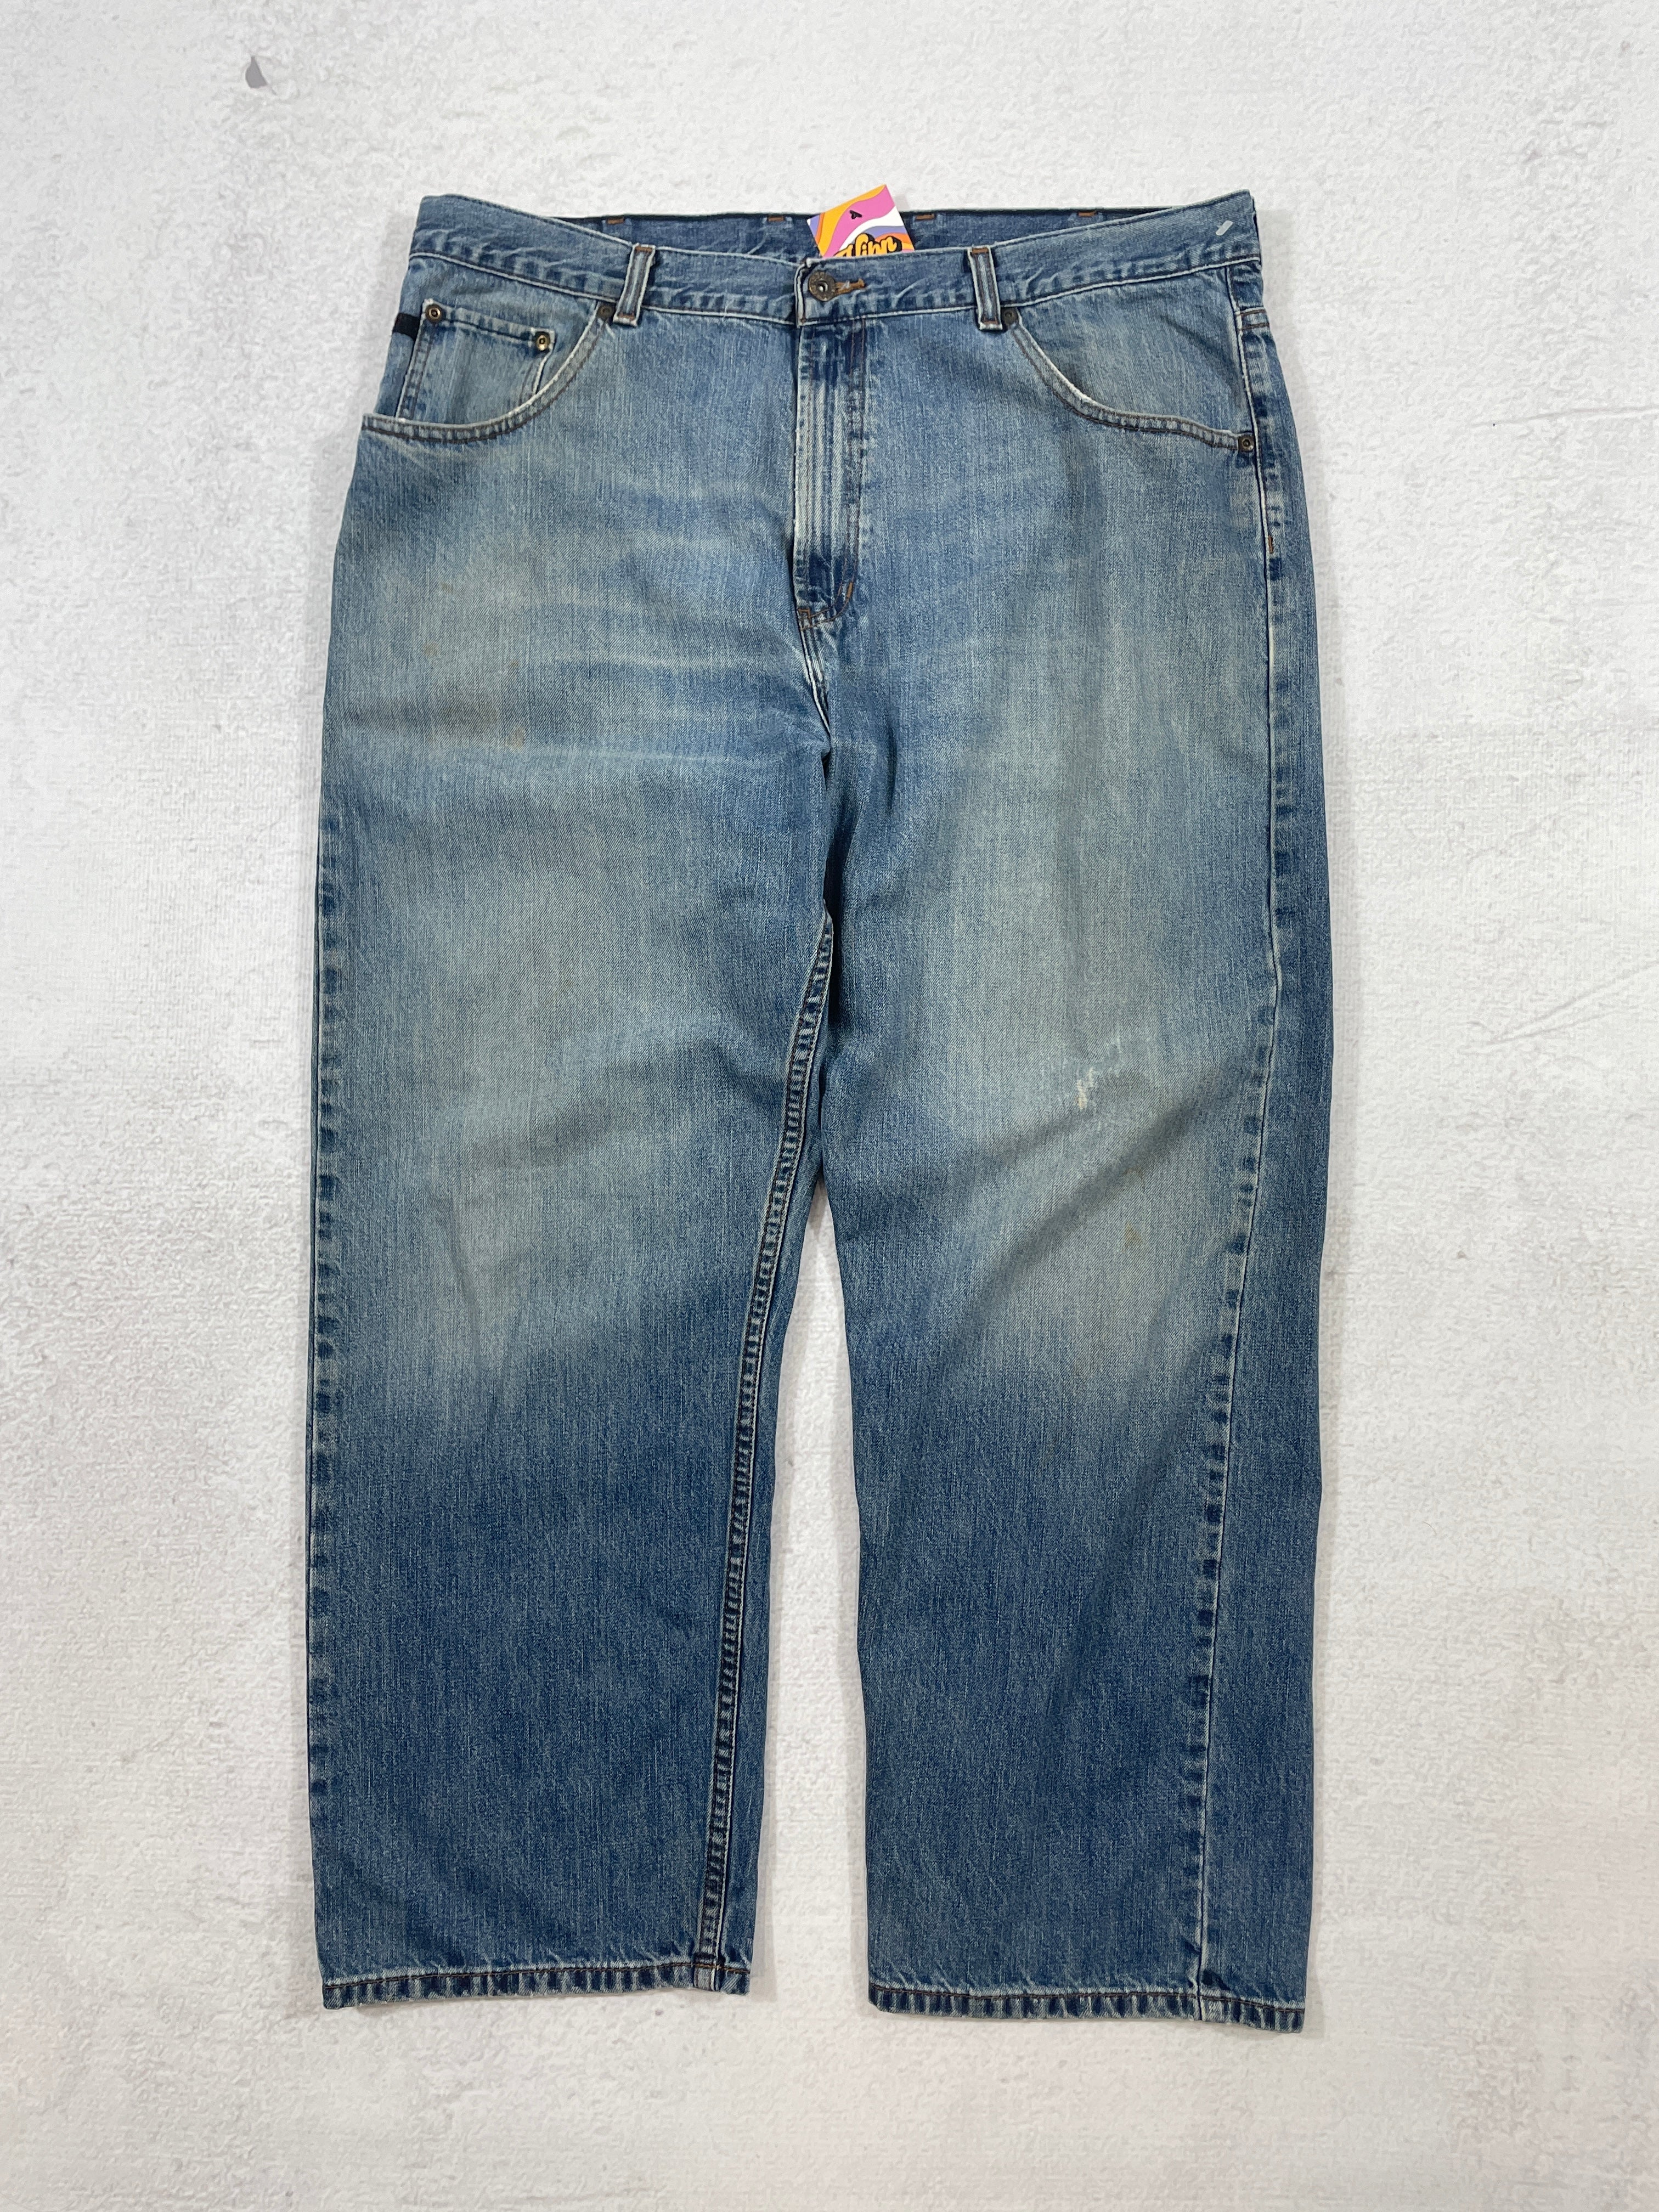 Vintage Tommy Hilfiger Jeans - Men's 40Wx30L